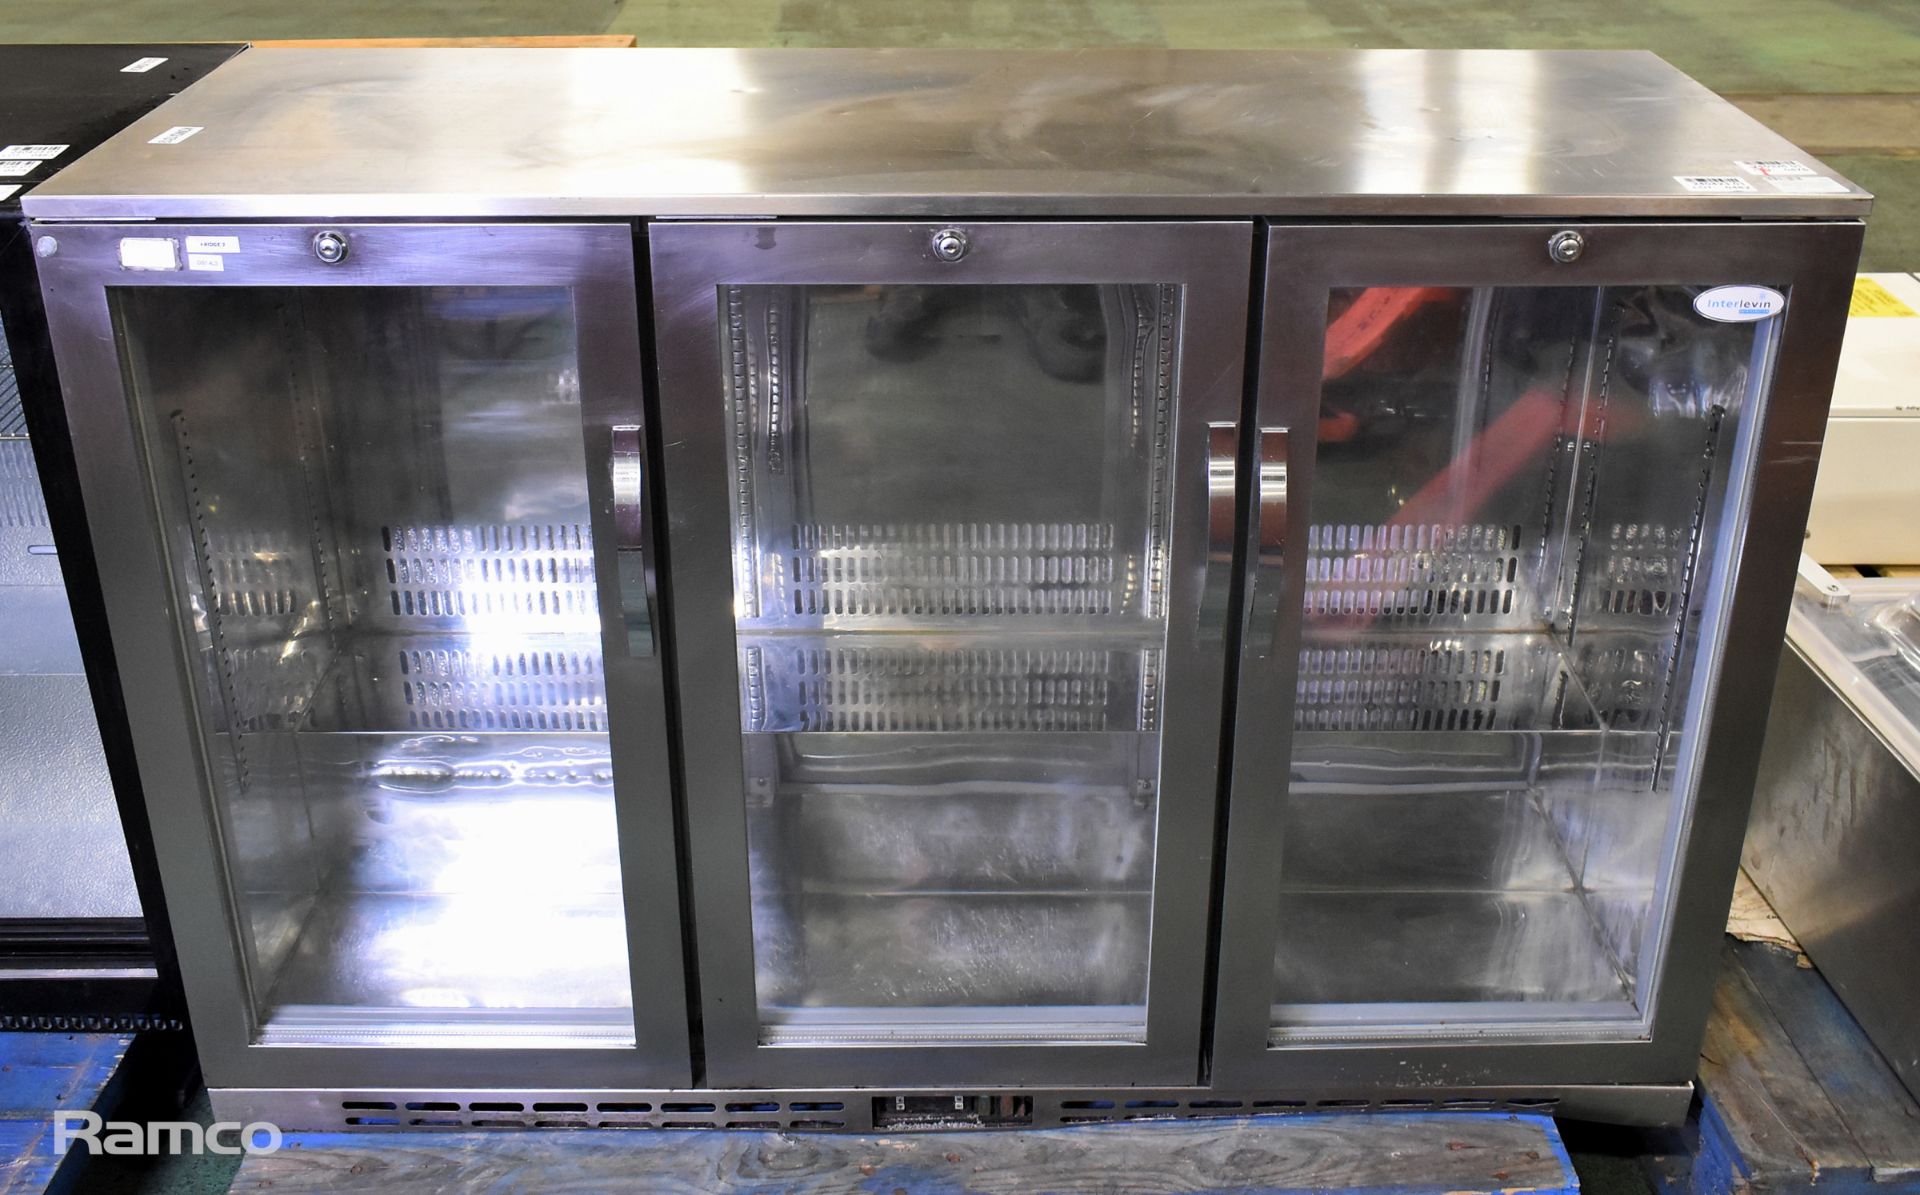 Interlevin PD30H-SS stainless steel triple door bar back bottle cooler - W 1350 x D 500 x H 900mm